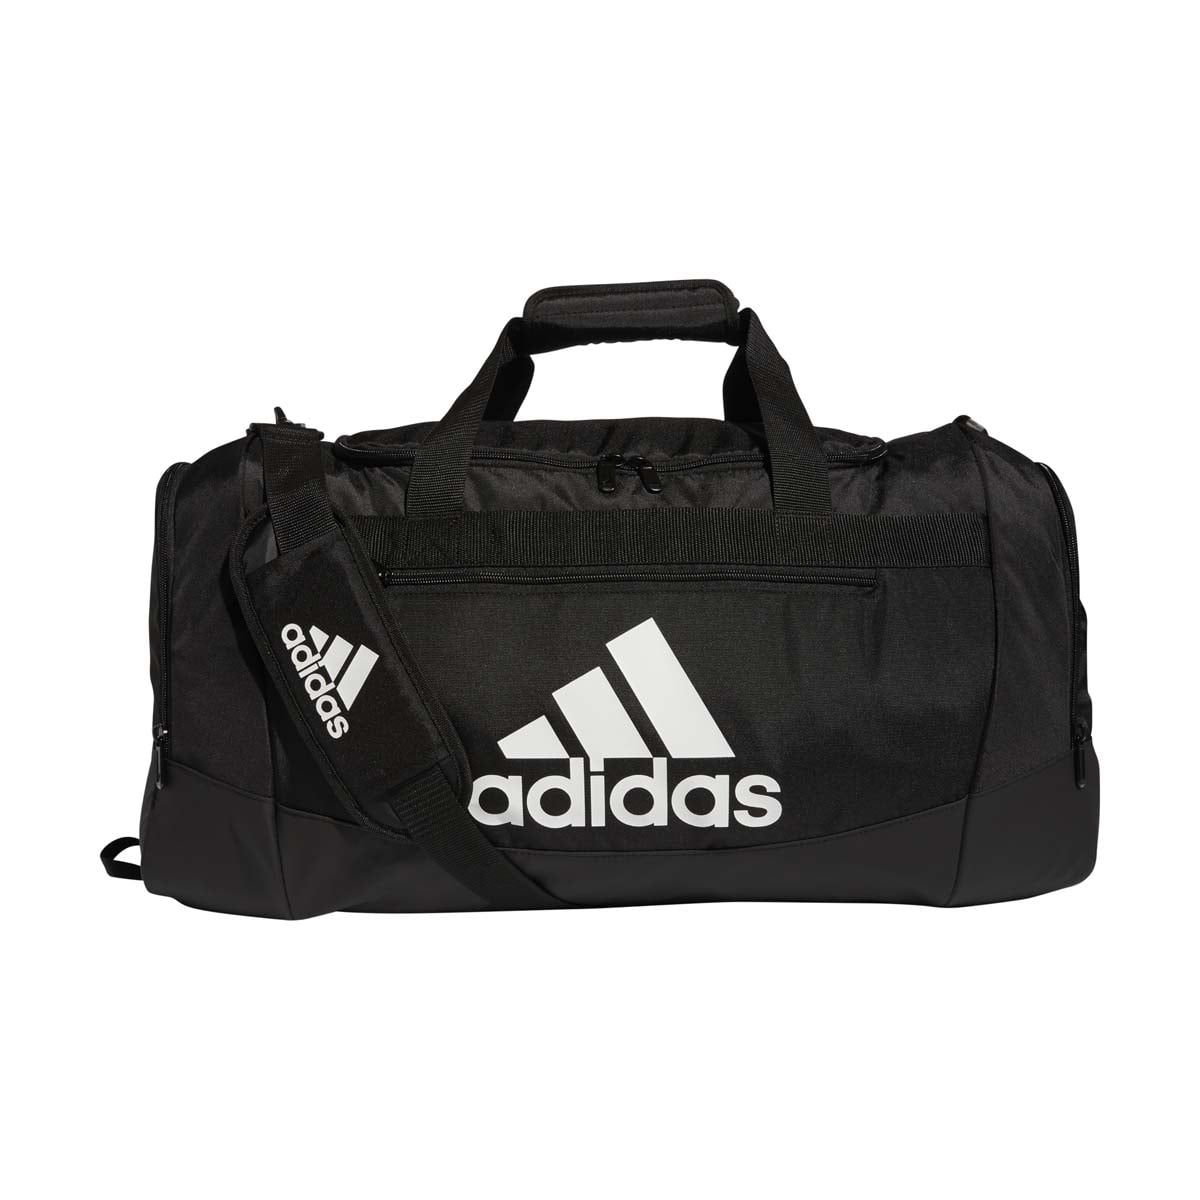 Adicolor Classic Festival Bag | Bag | Stirling Sports